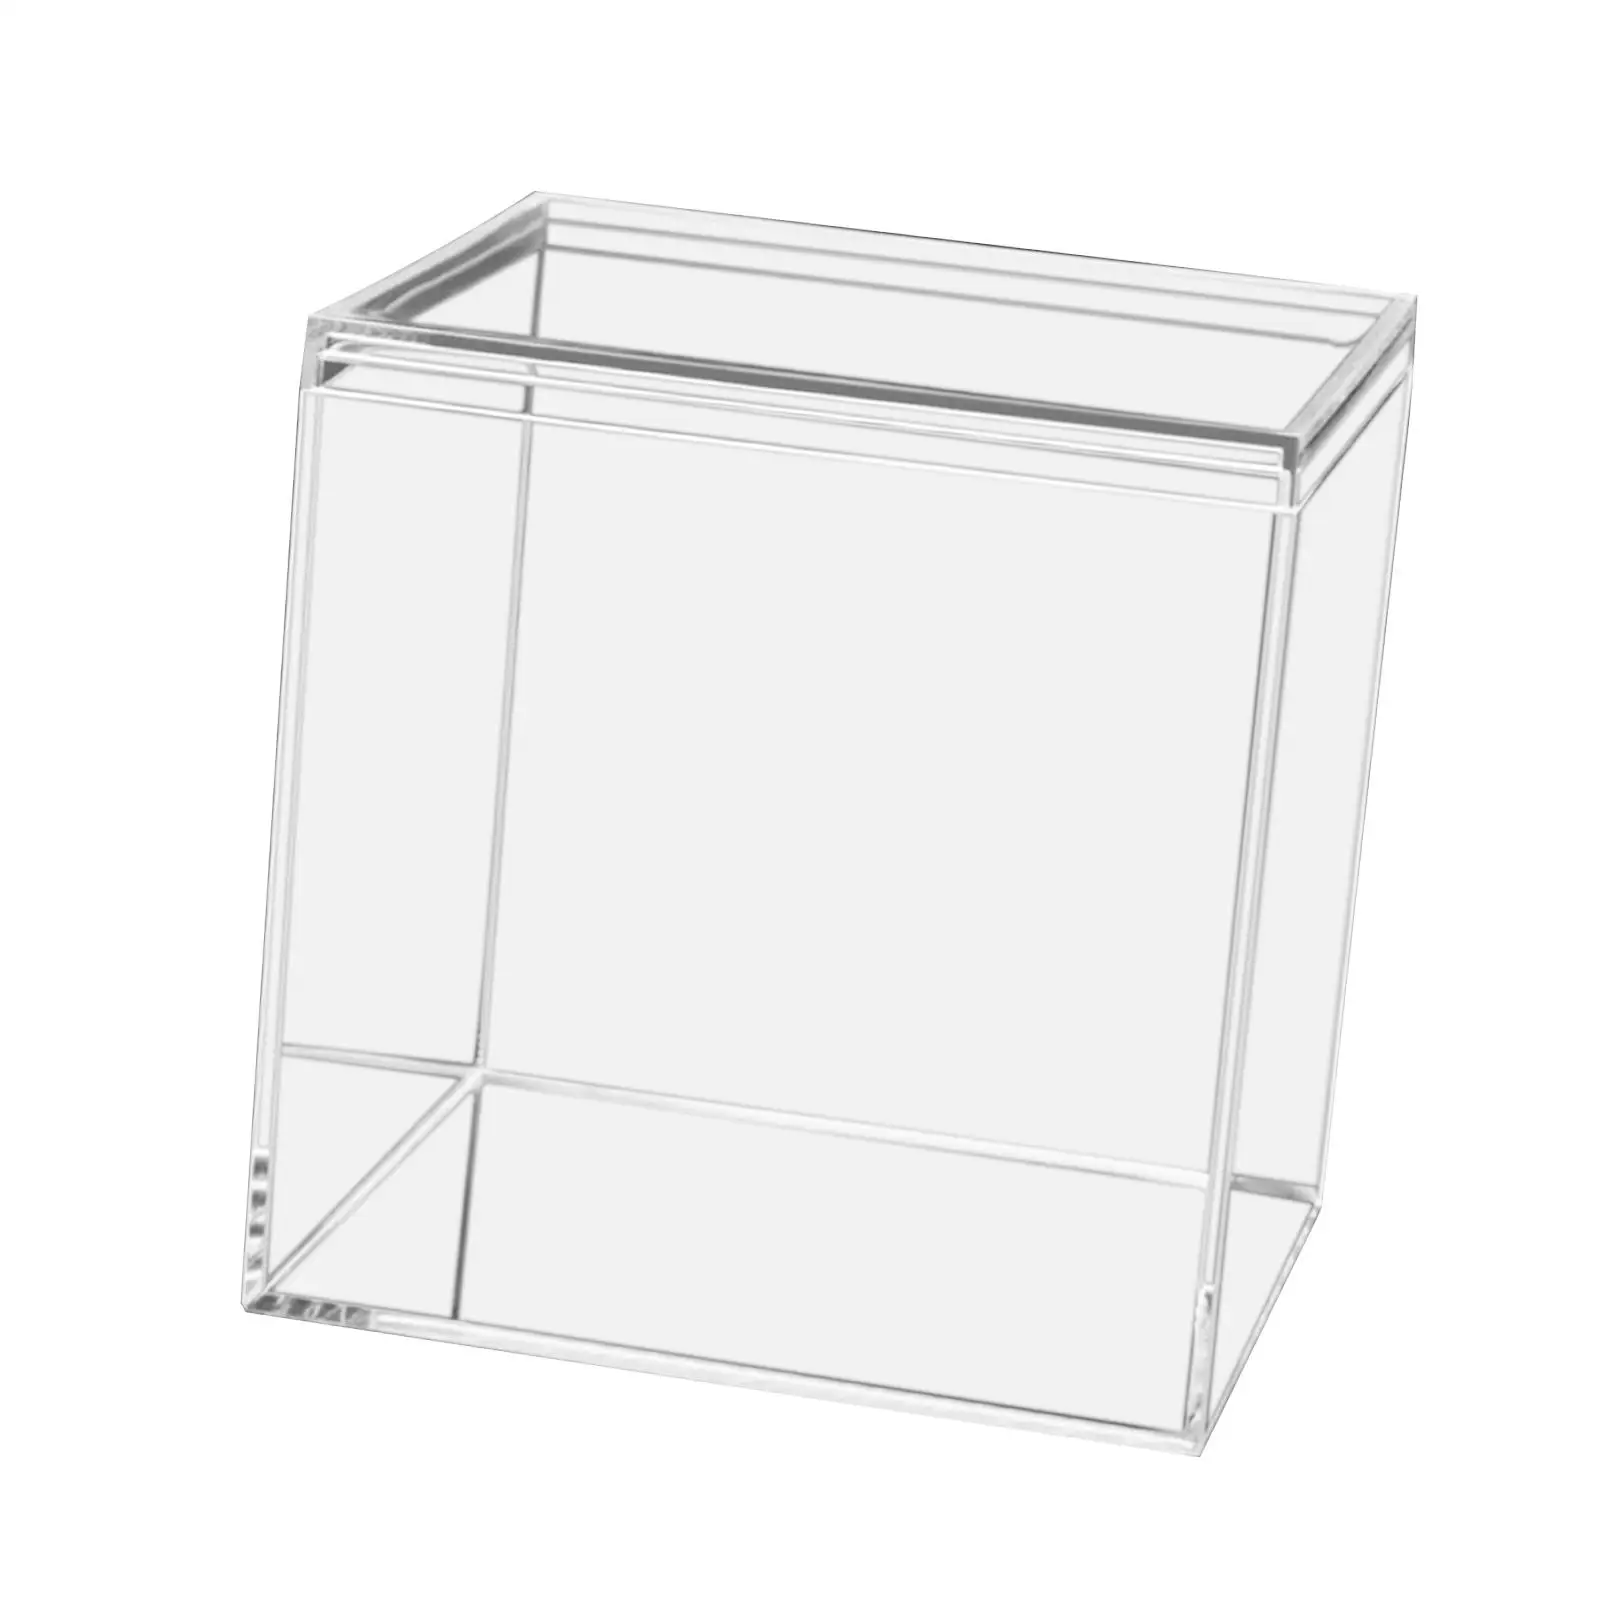 Waterproof Square Display Rack Cases, Display Stand ,Transparent Acrylic Display